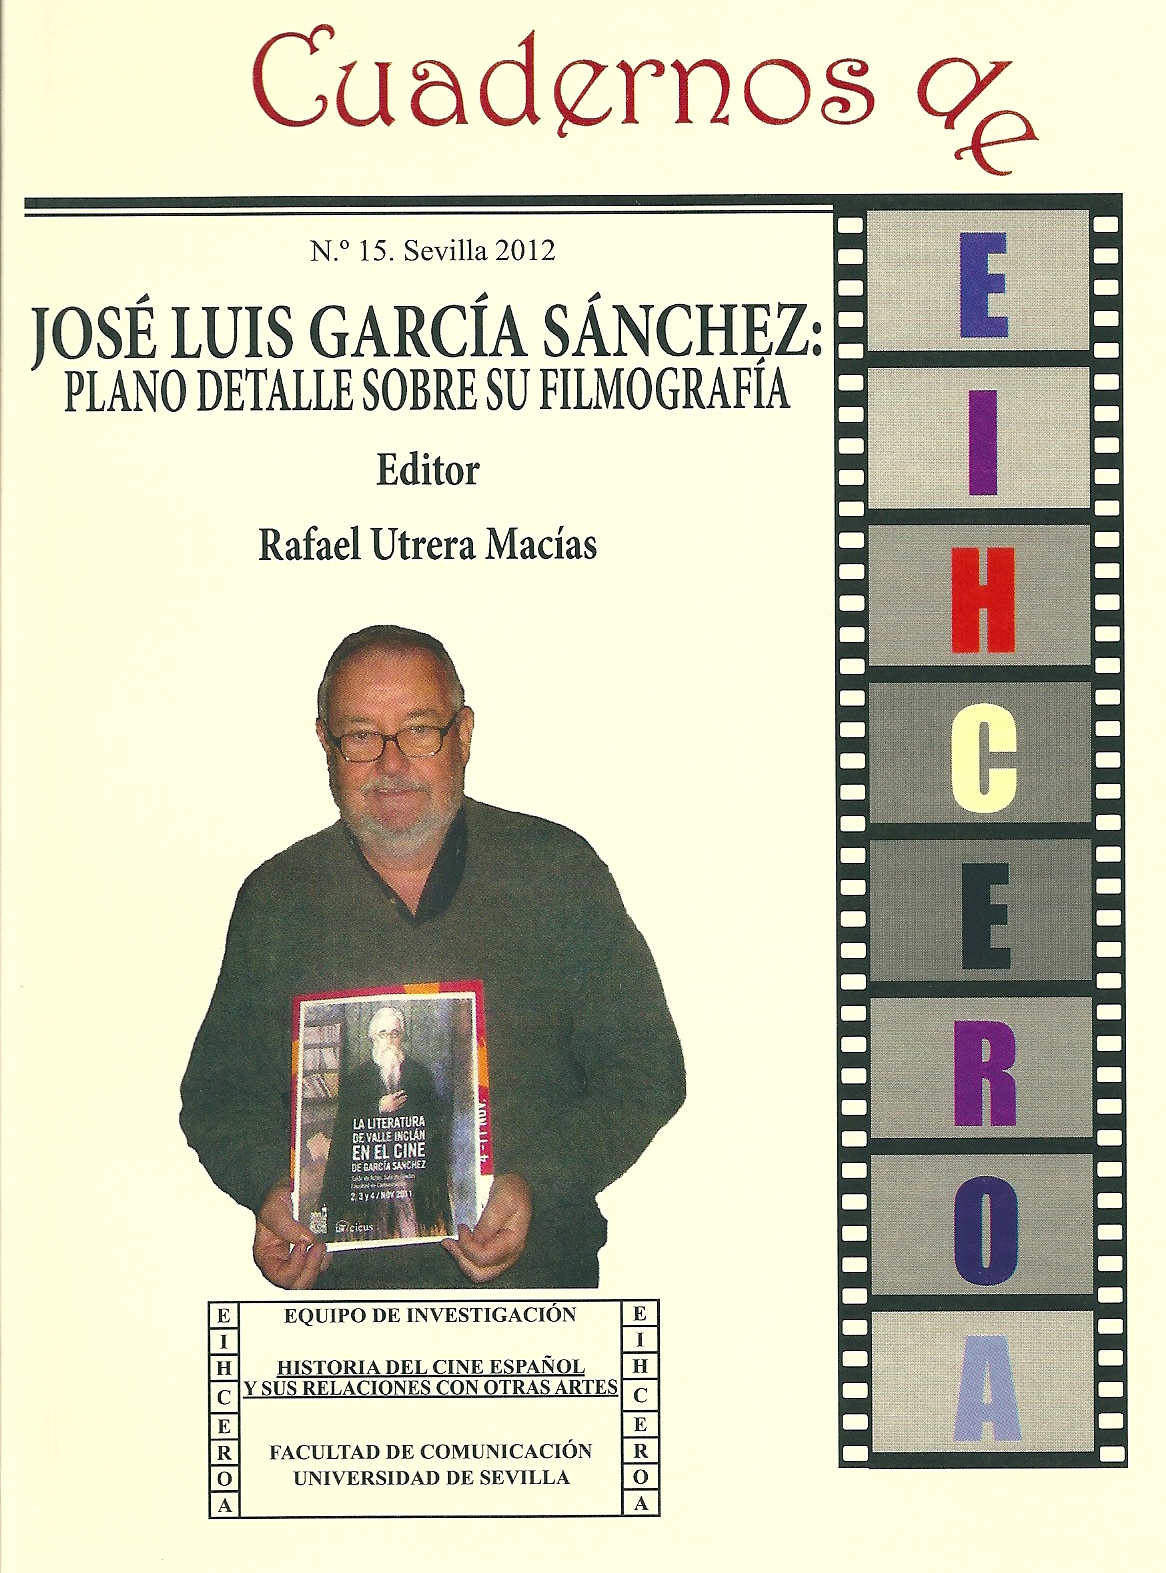 Jose Luis Garca Snchez: plano detalle sobre su filmografa.